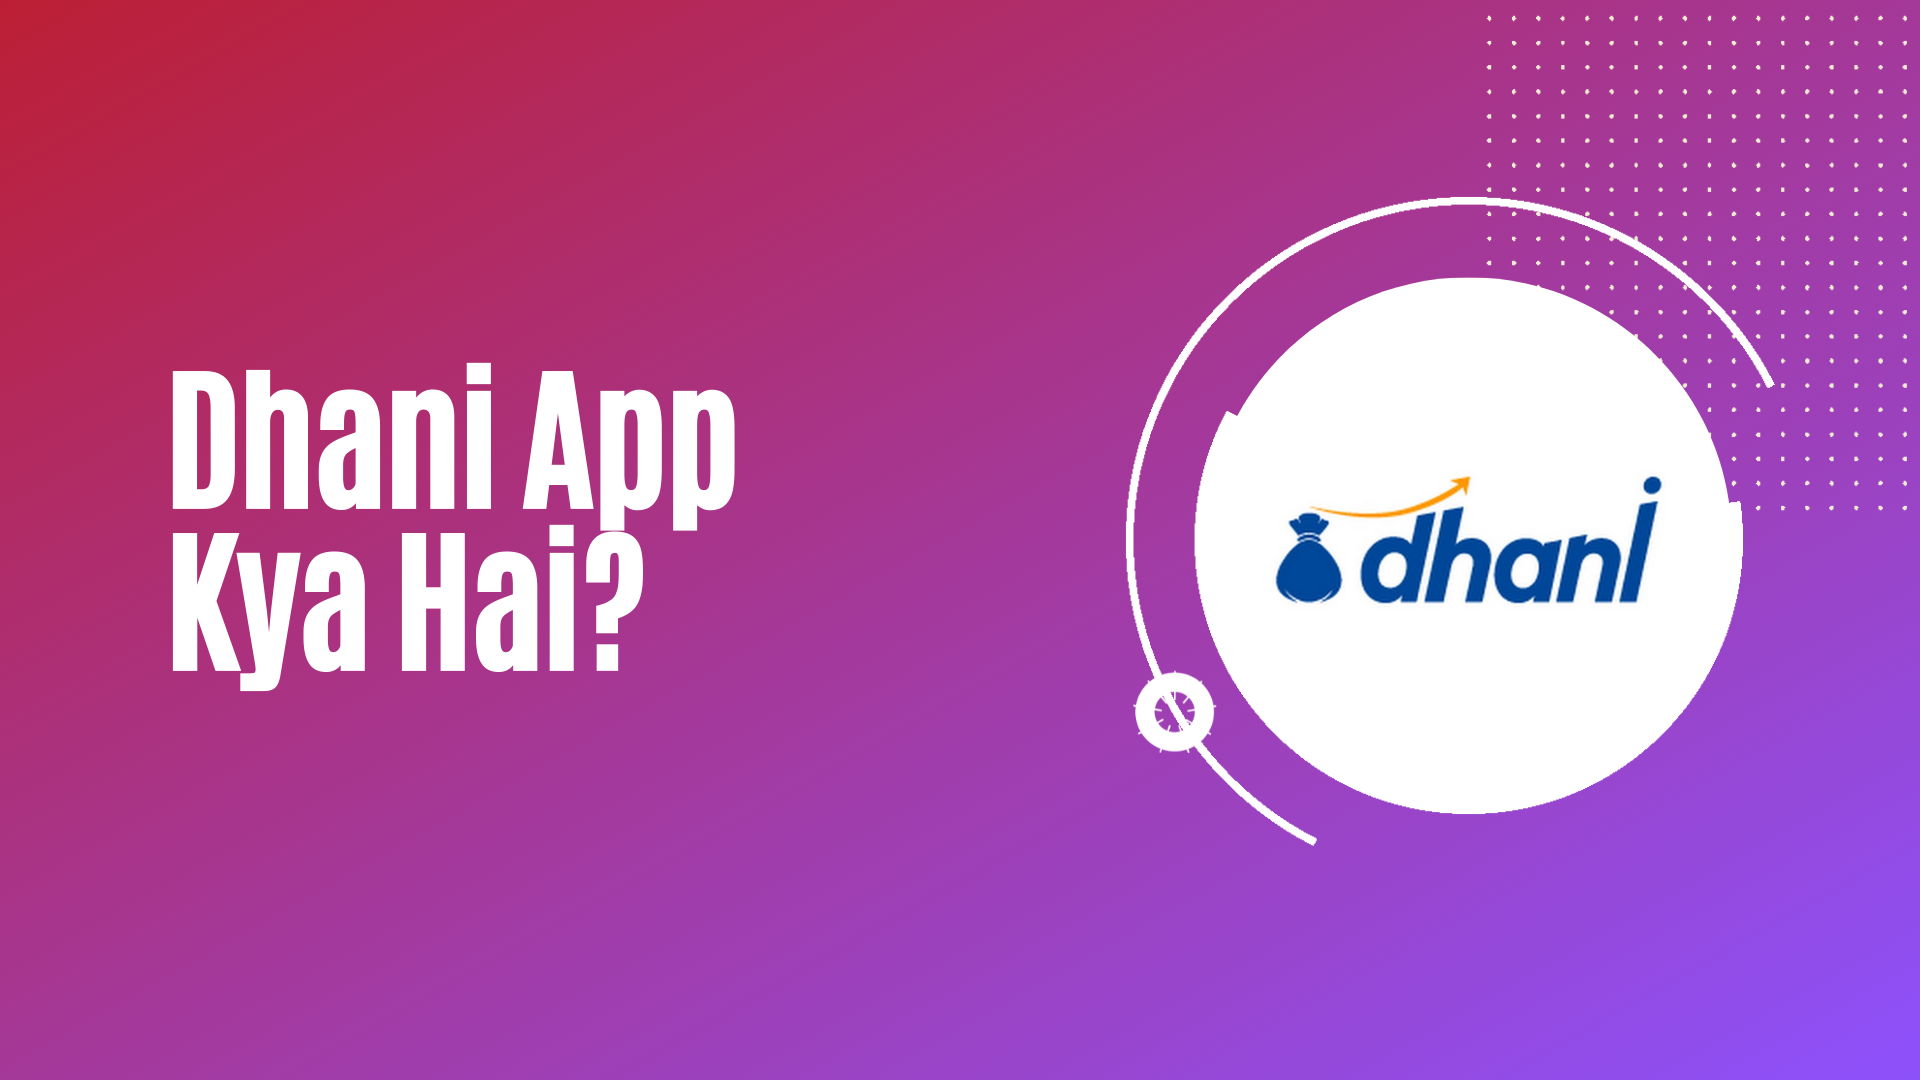 Dhani App Kya Hai? इसे कैसे Use करें?